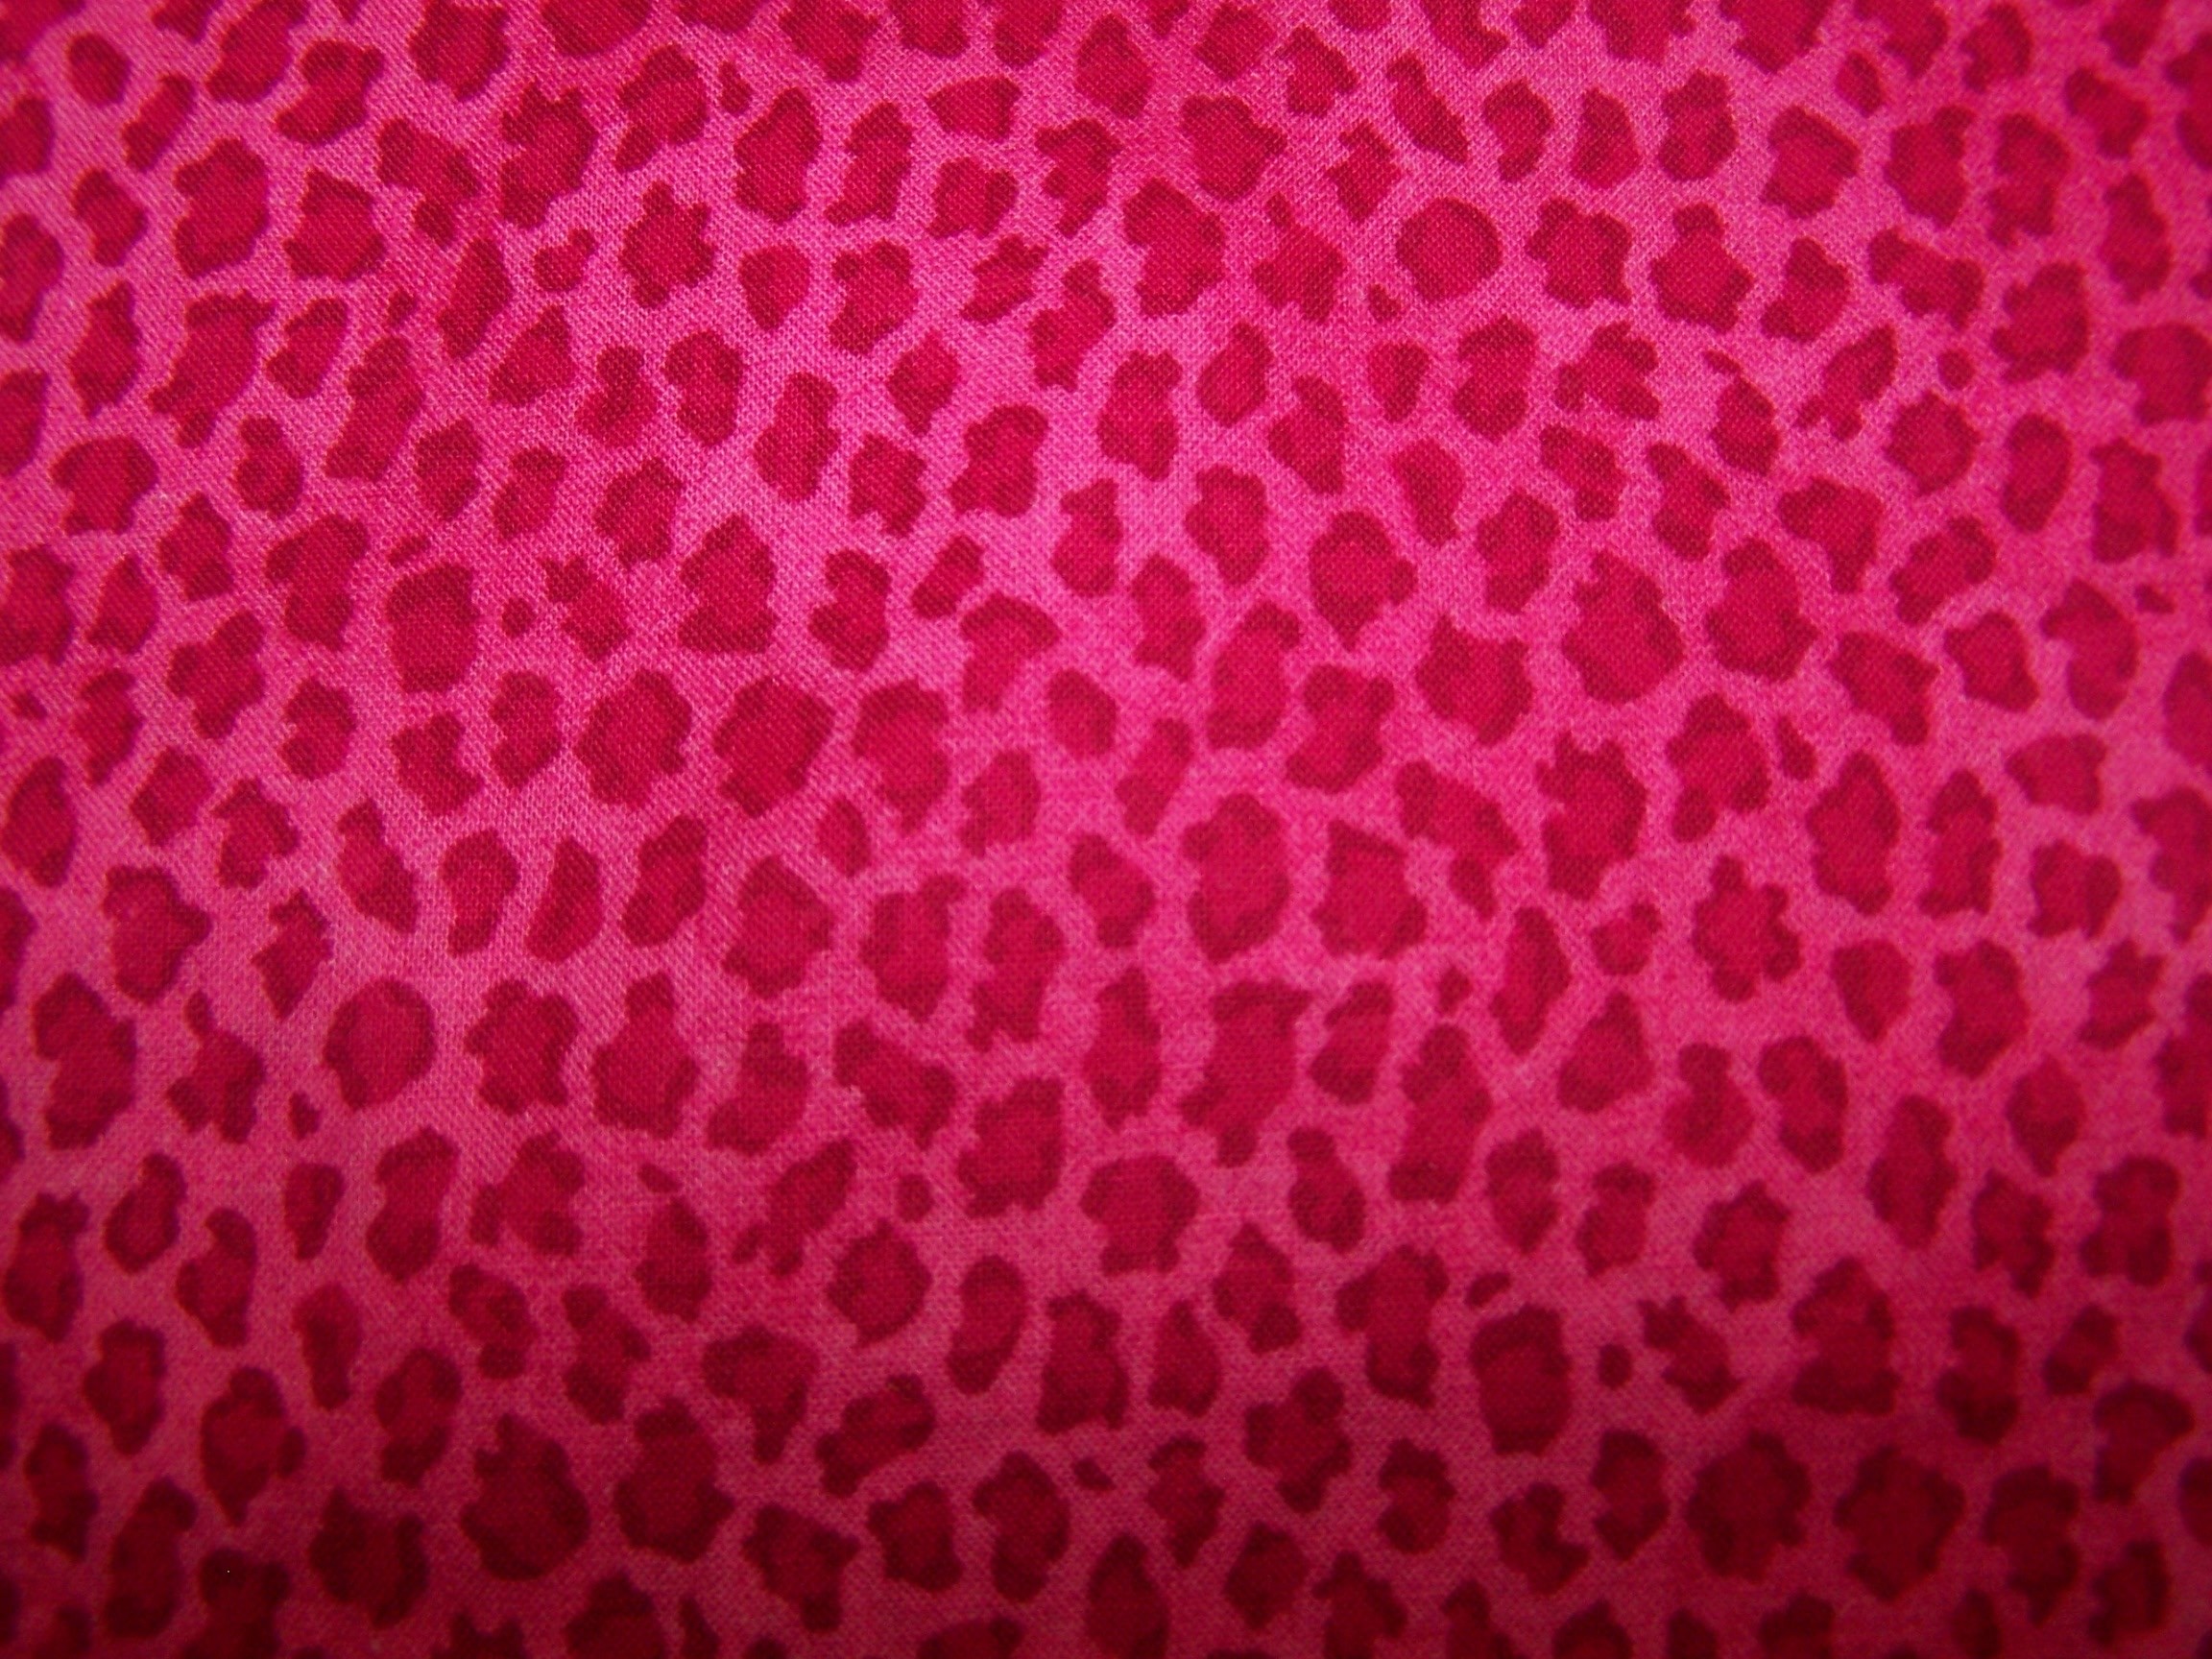 2304x1728 hot pink leopard iphone wallpaper ...